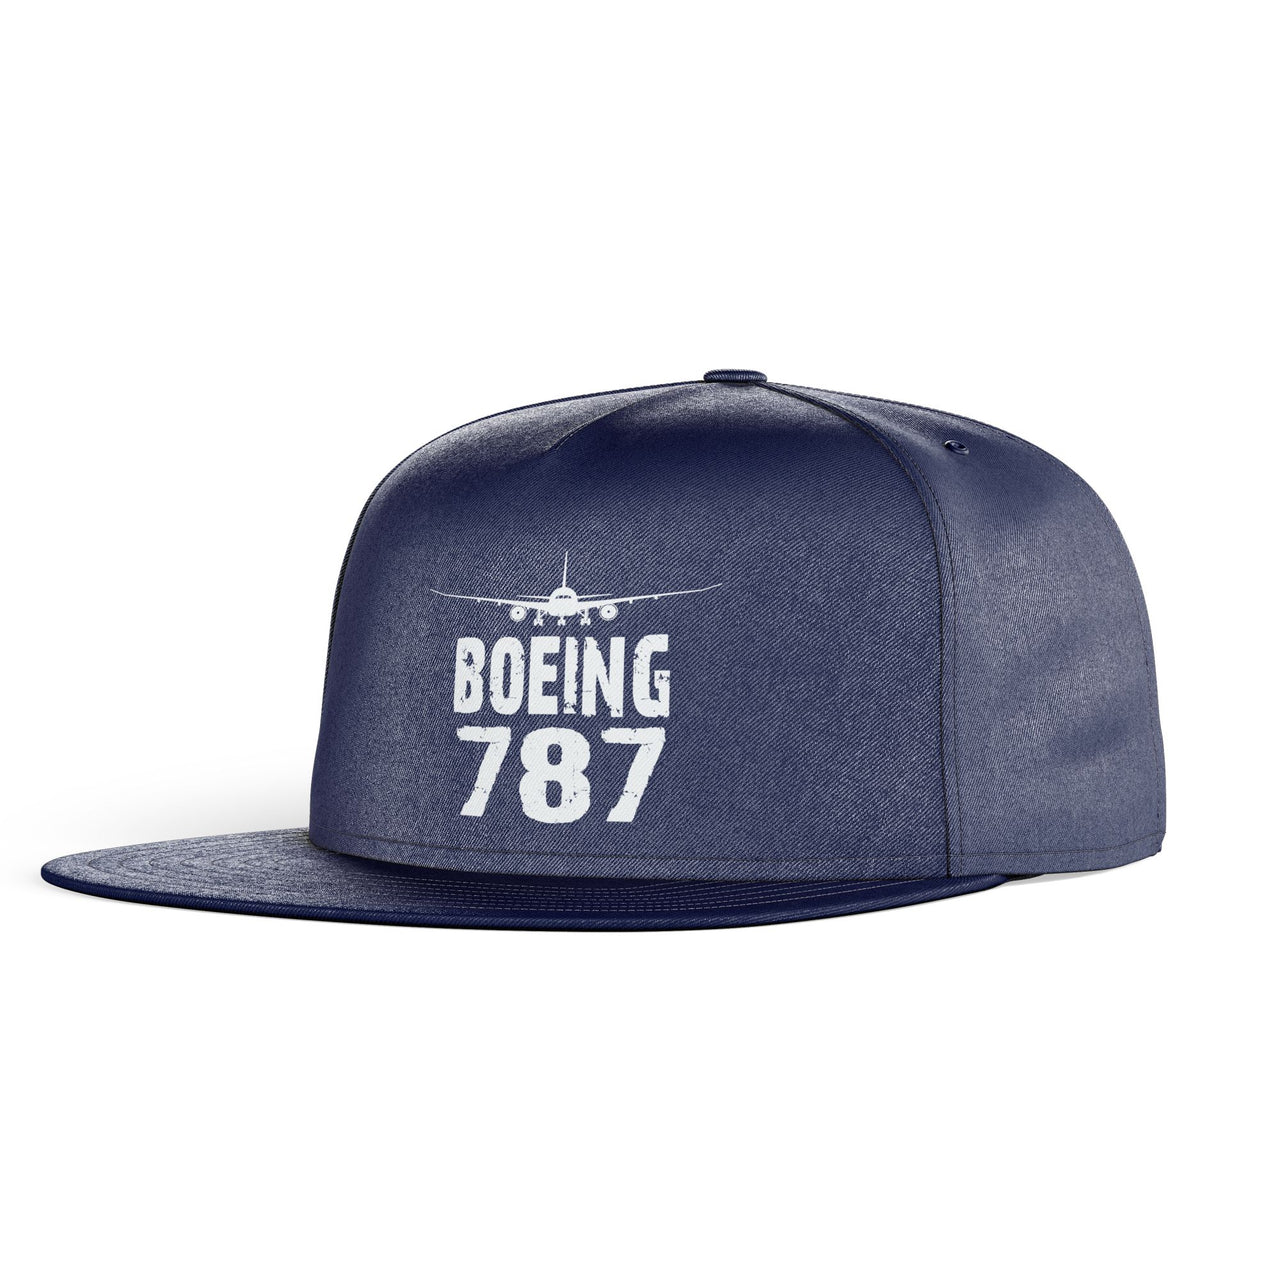 Boeing 787 & Plane Designed Snapback Caps & Hats